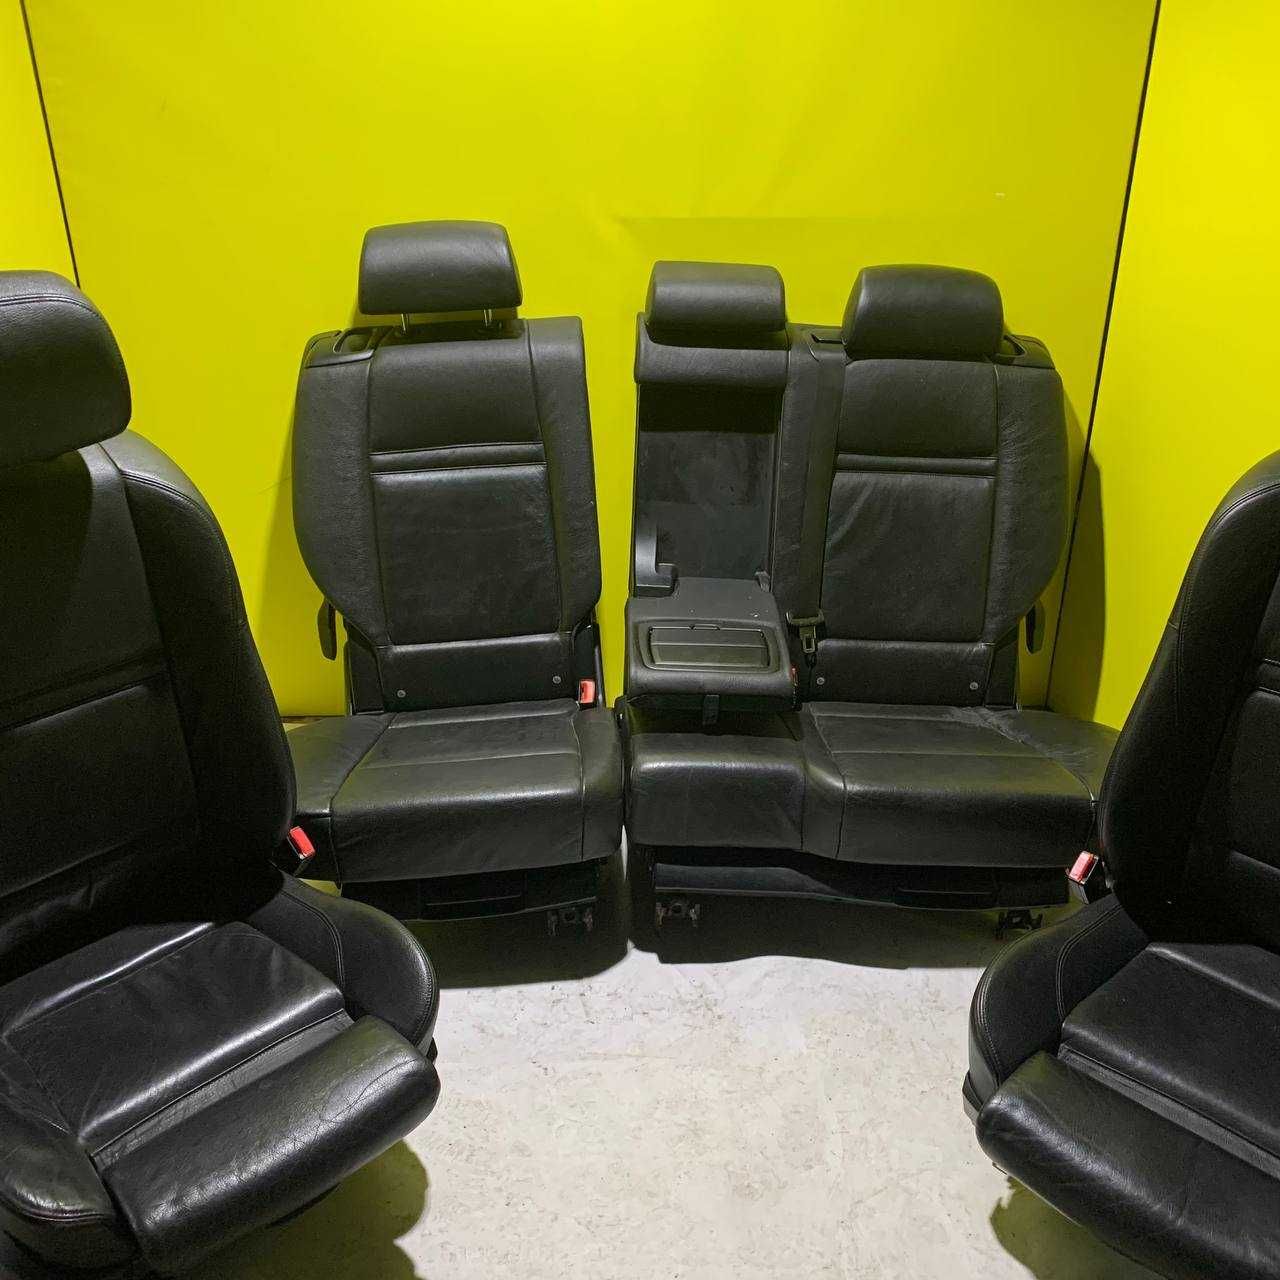 Салон сидіння комплект BMW X5 E70 сидения бмв е 70 bmw 52107250000